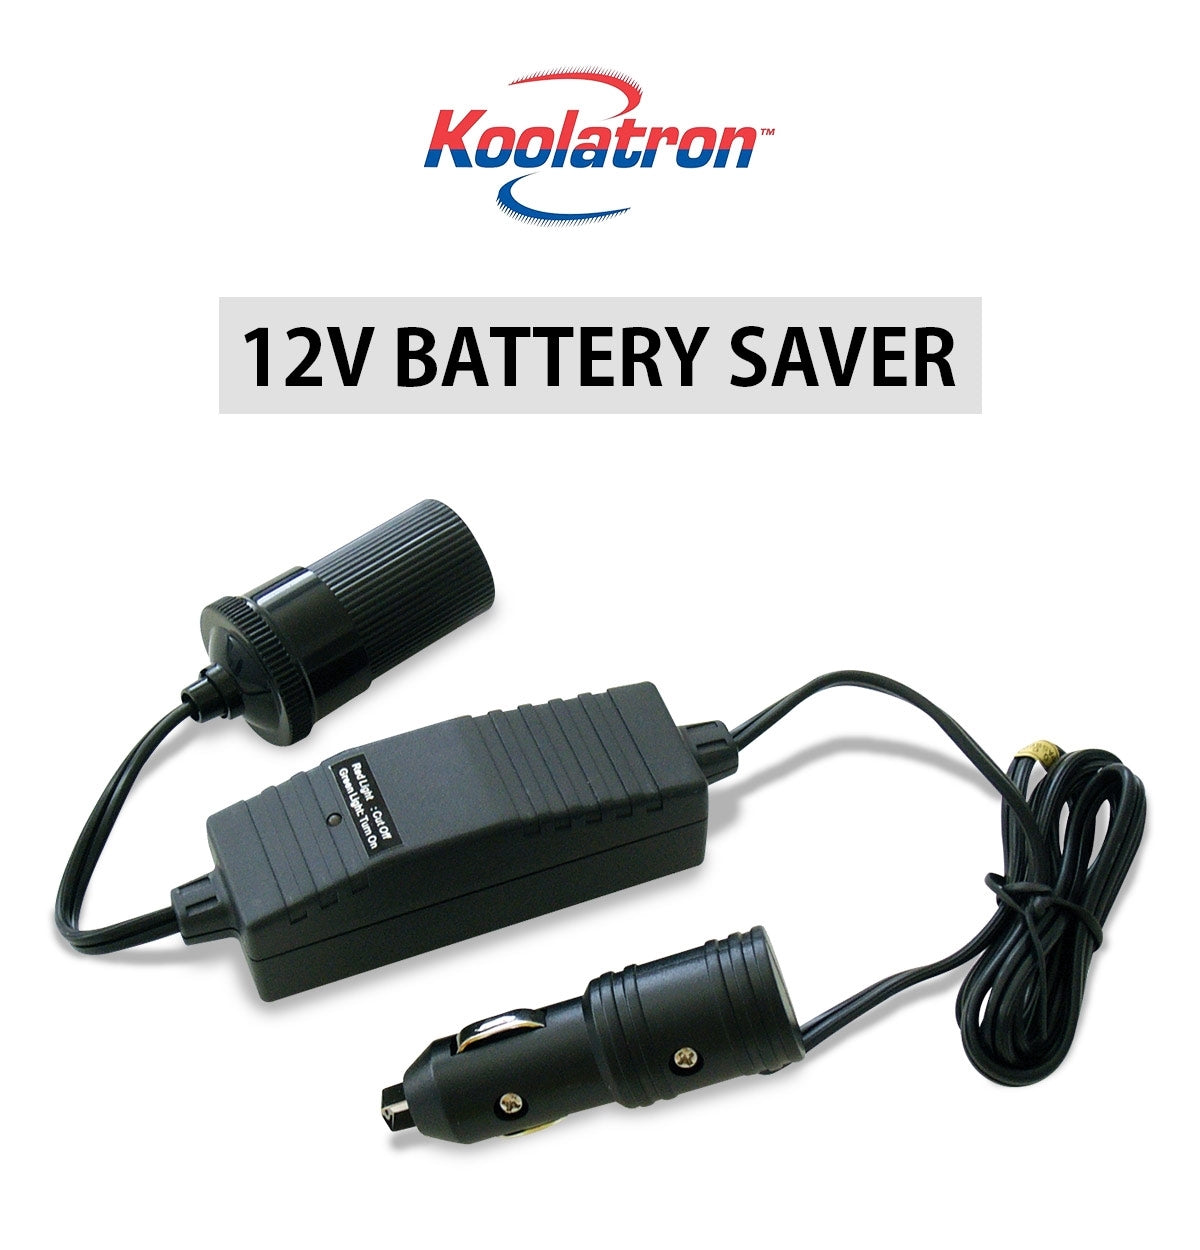 Koolatron 12V Battery Saver